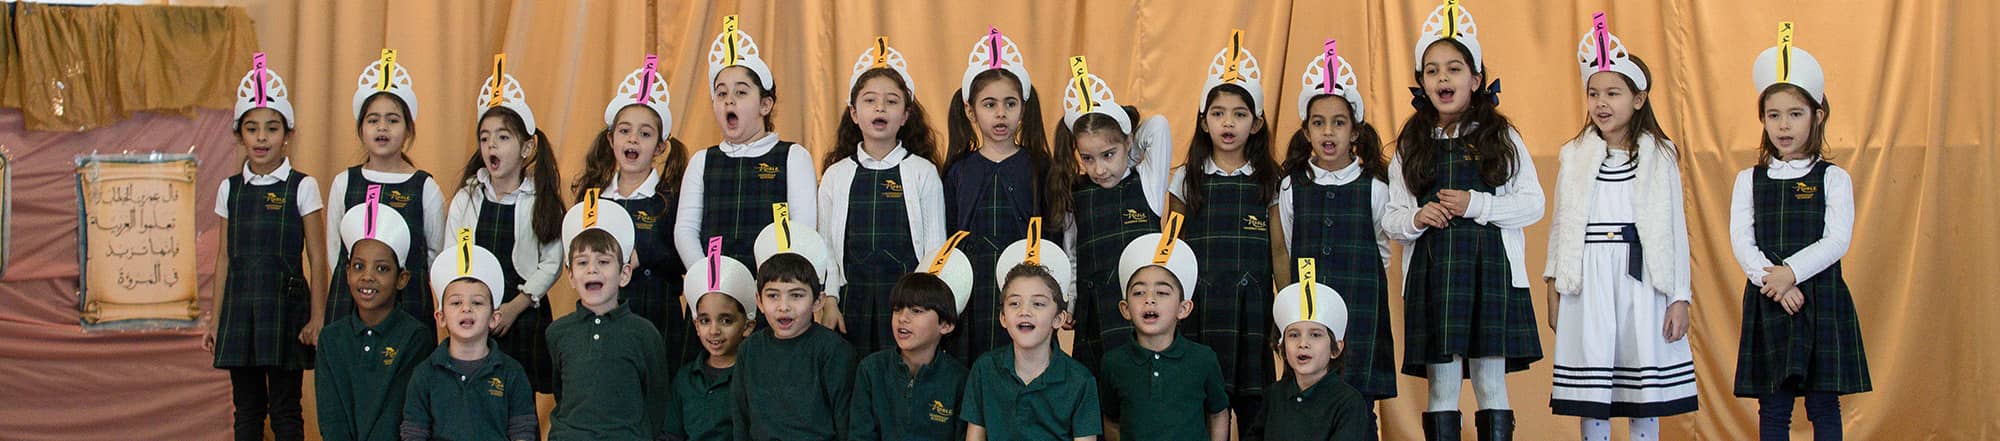 Elementary Kids Singing on Stage